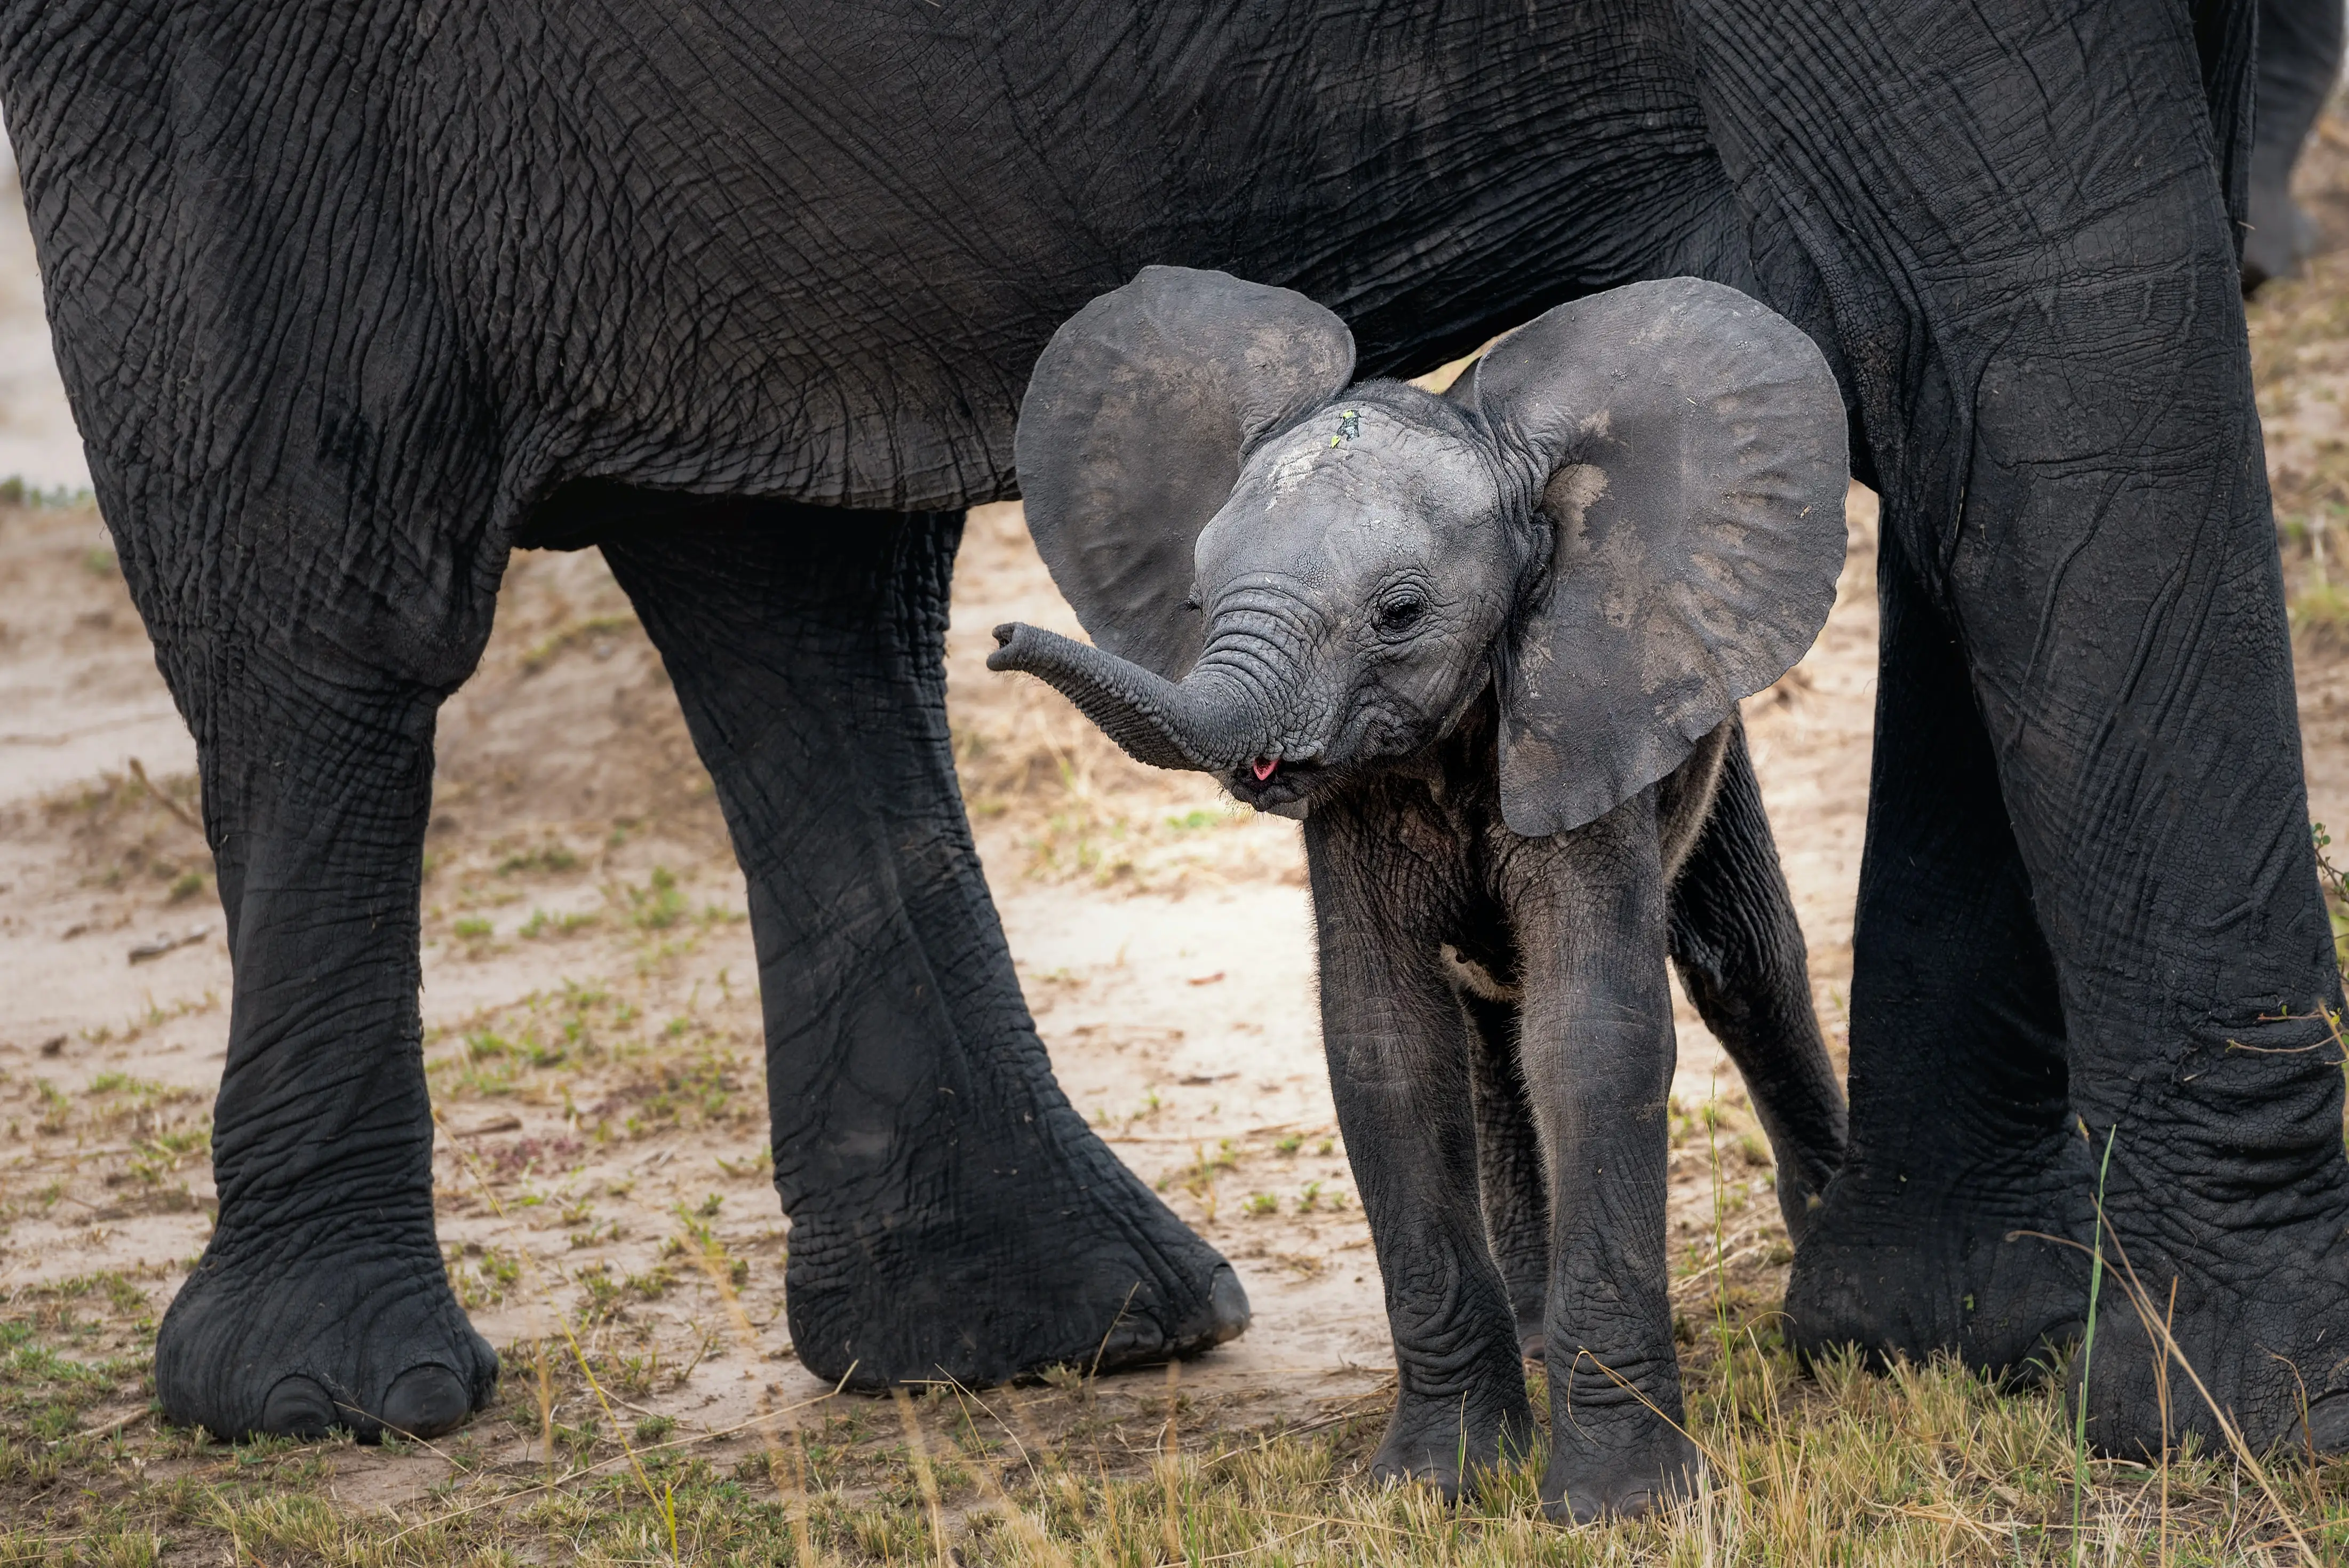 small elephant cub playing